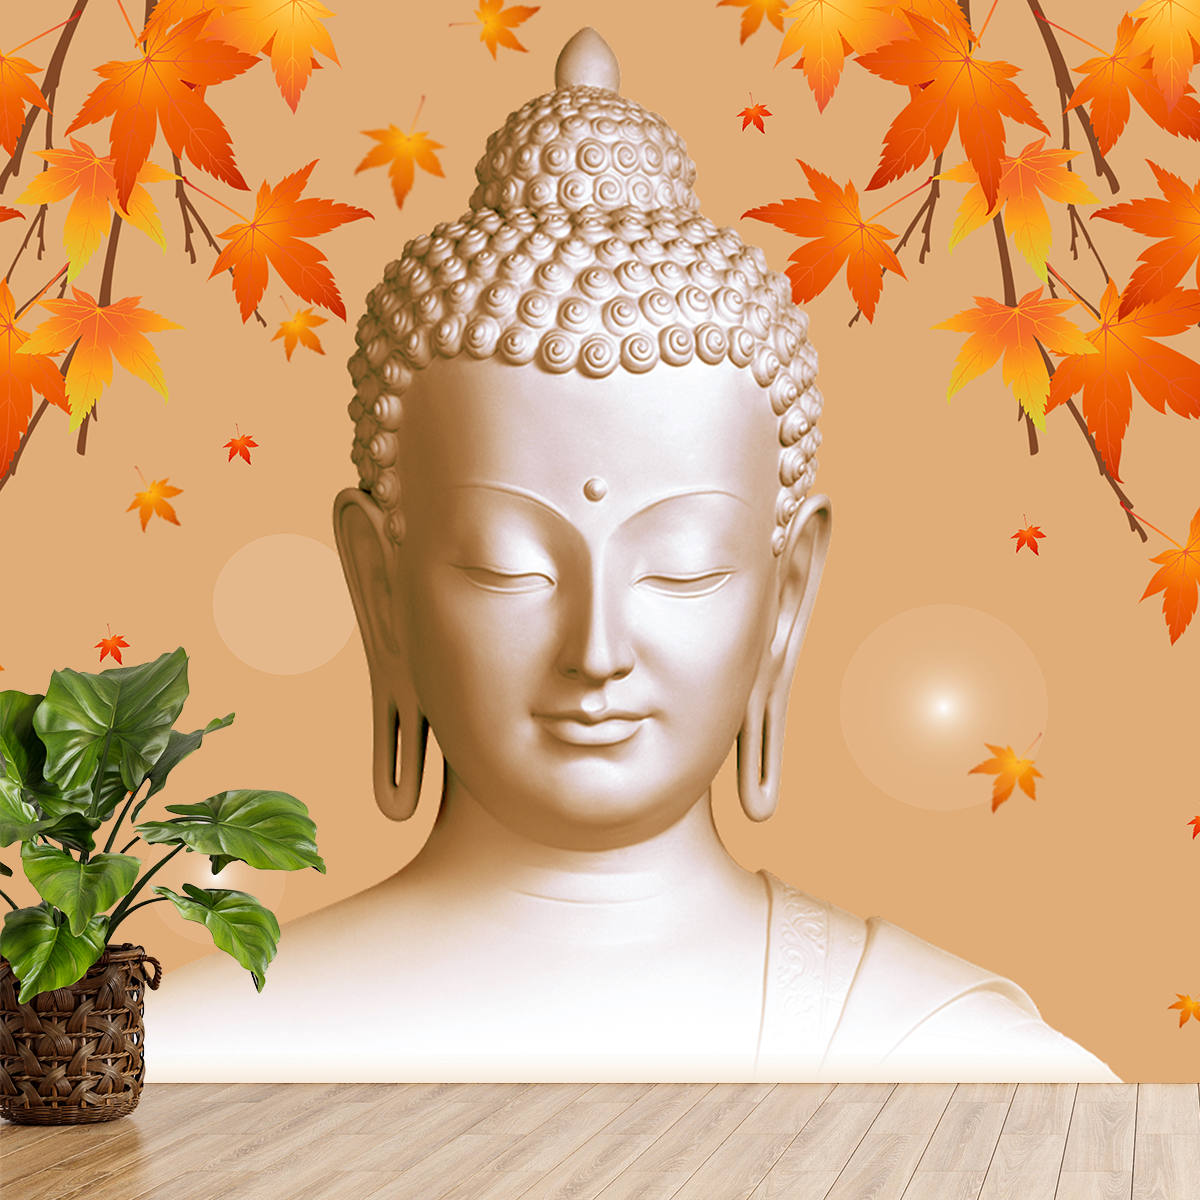 Beautiful Lord Buddha Wallpaper for Home Walls | HD Self Adhesive Wallpapers